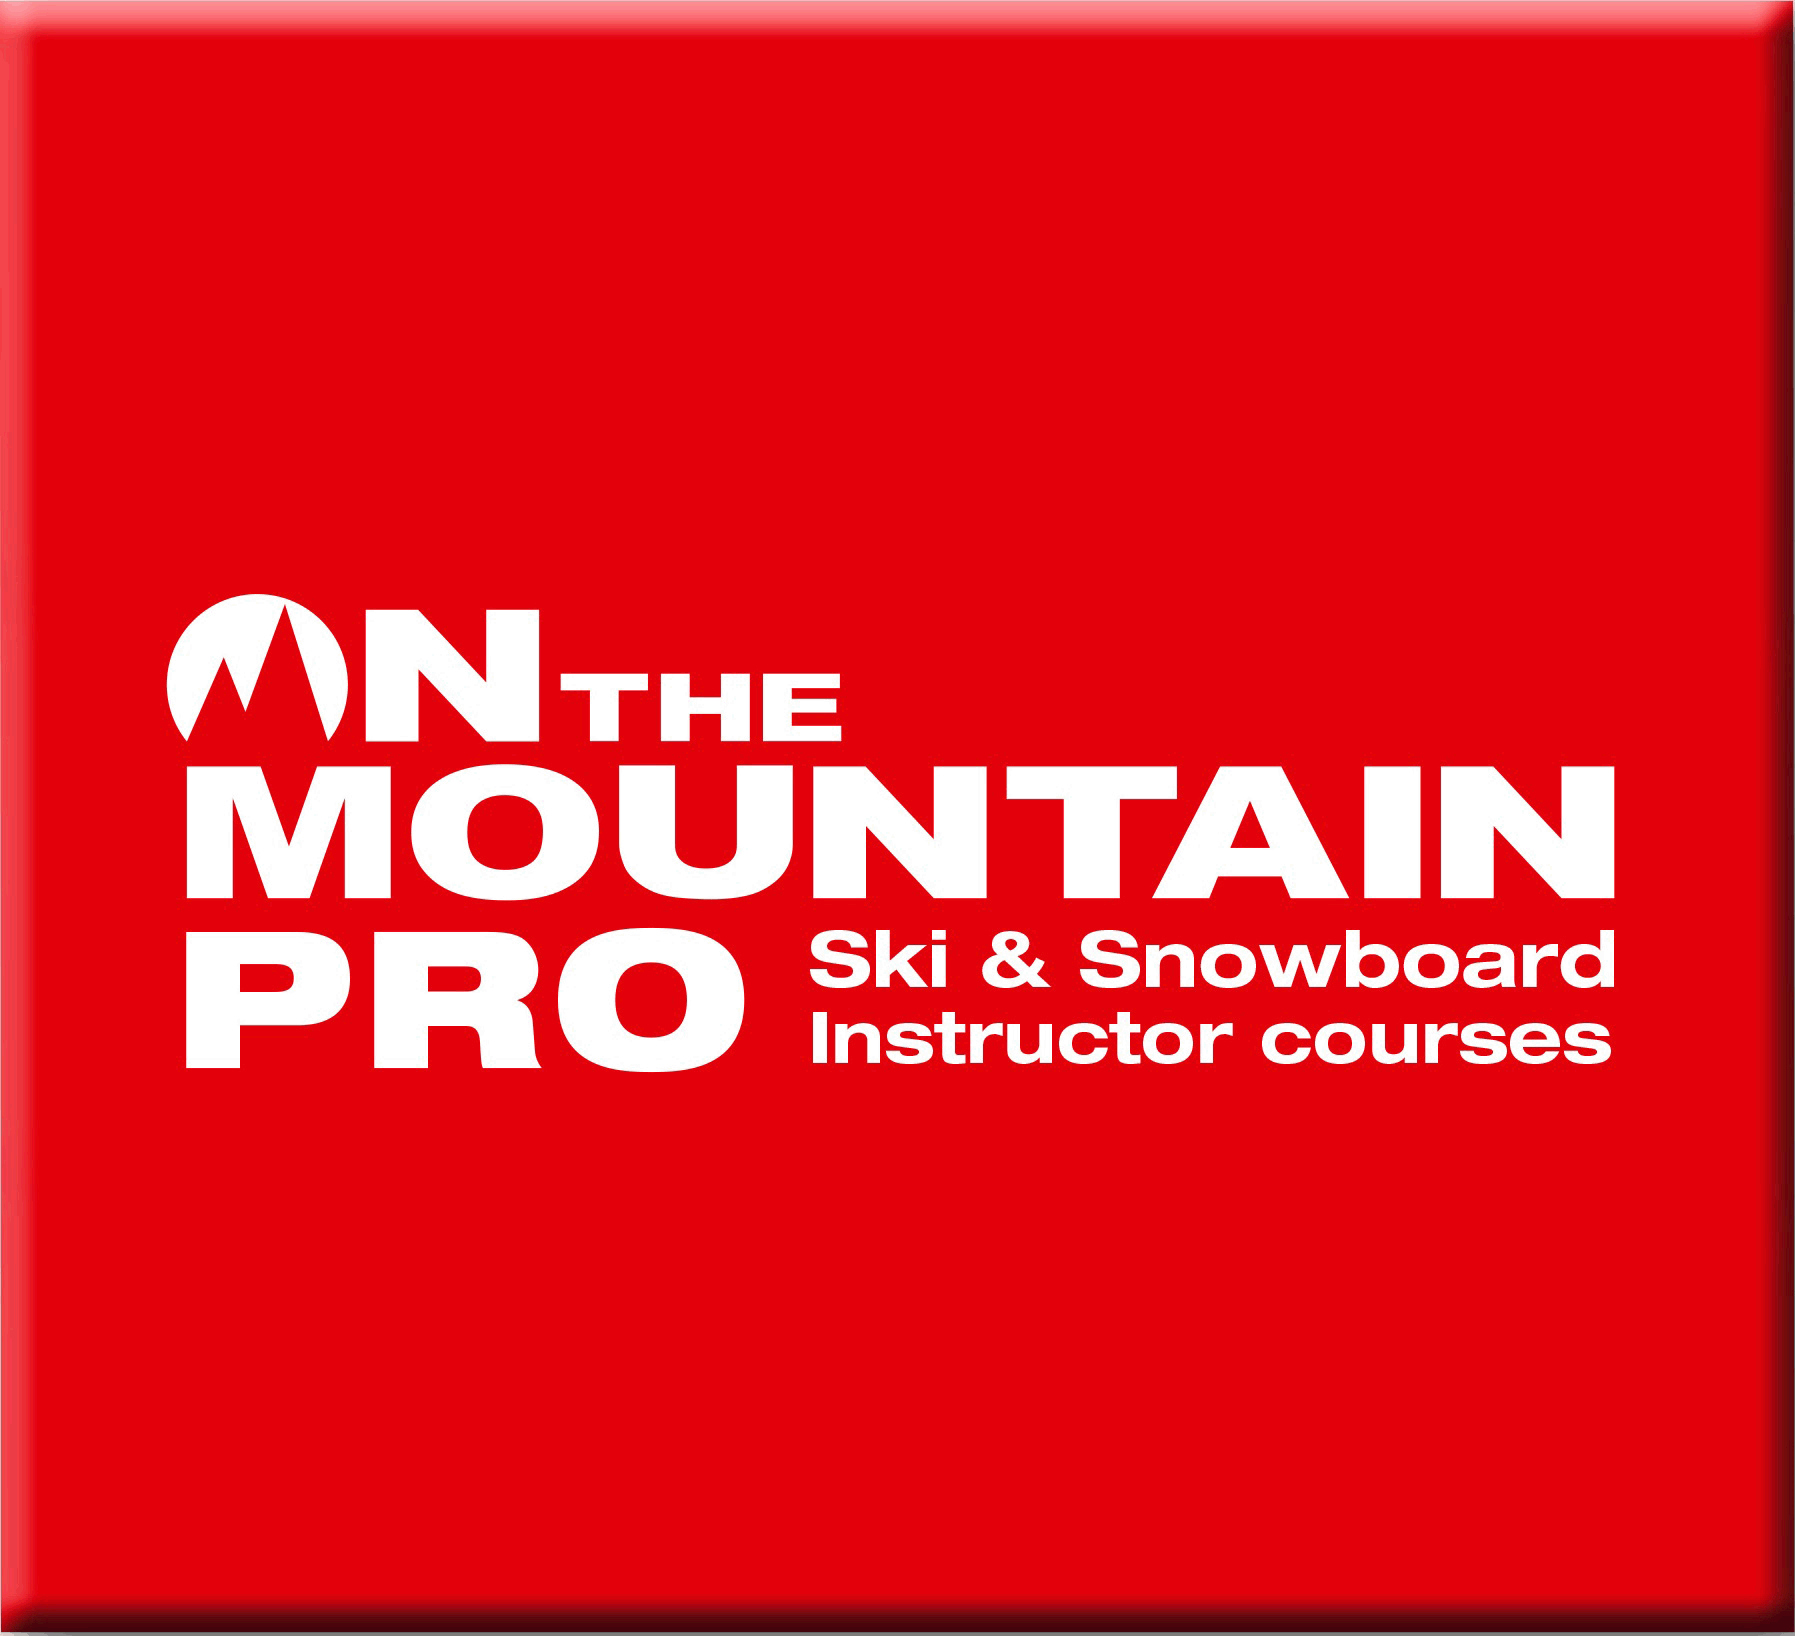 On The Mountain Pro (division of Neige Aventure Ski School)